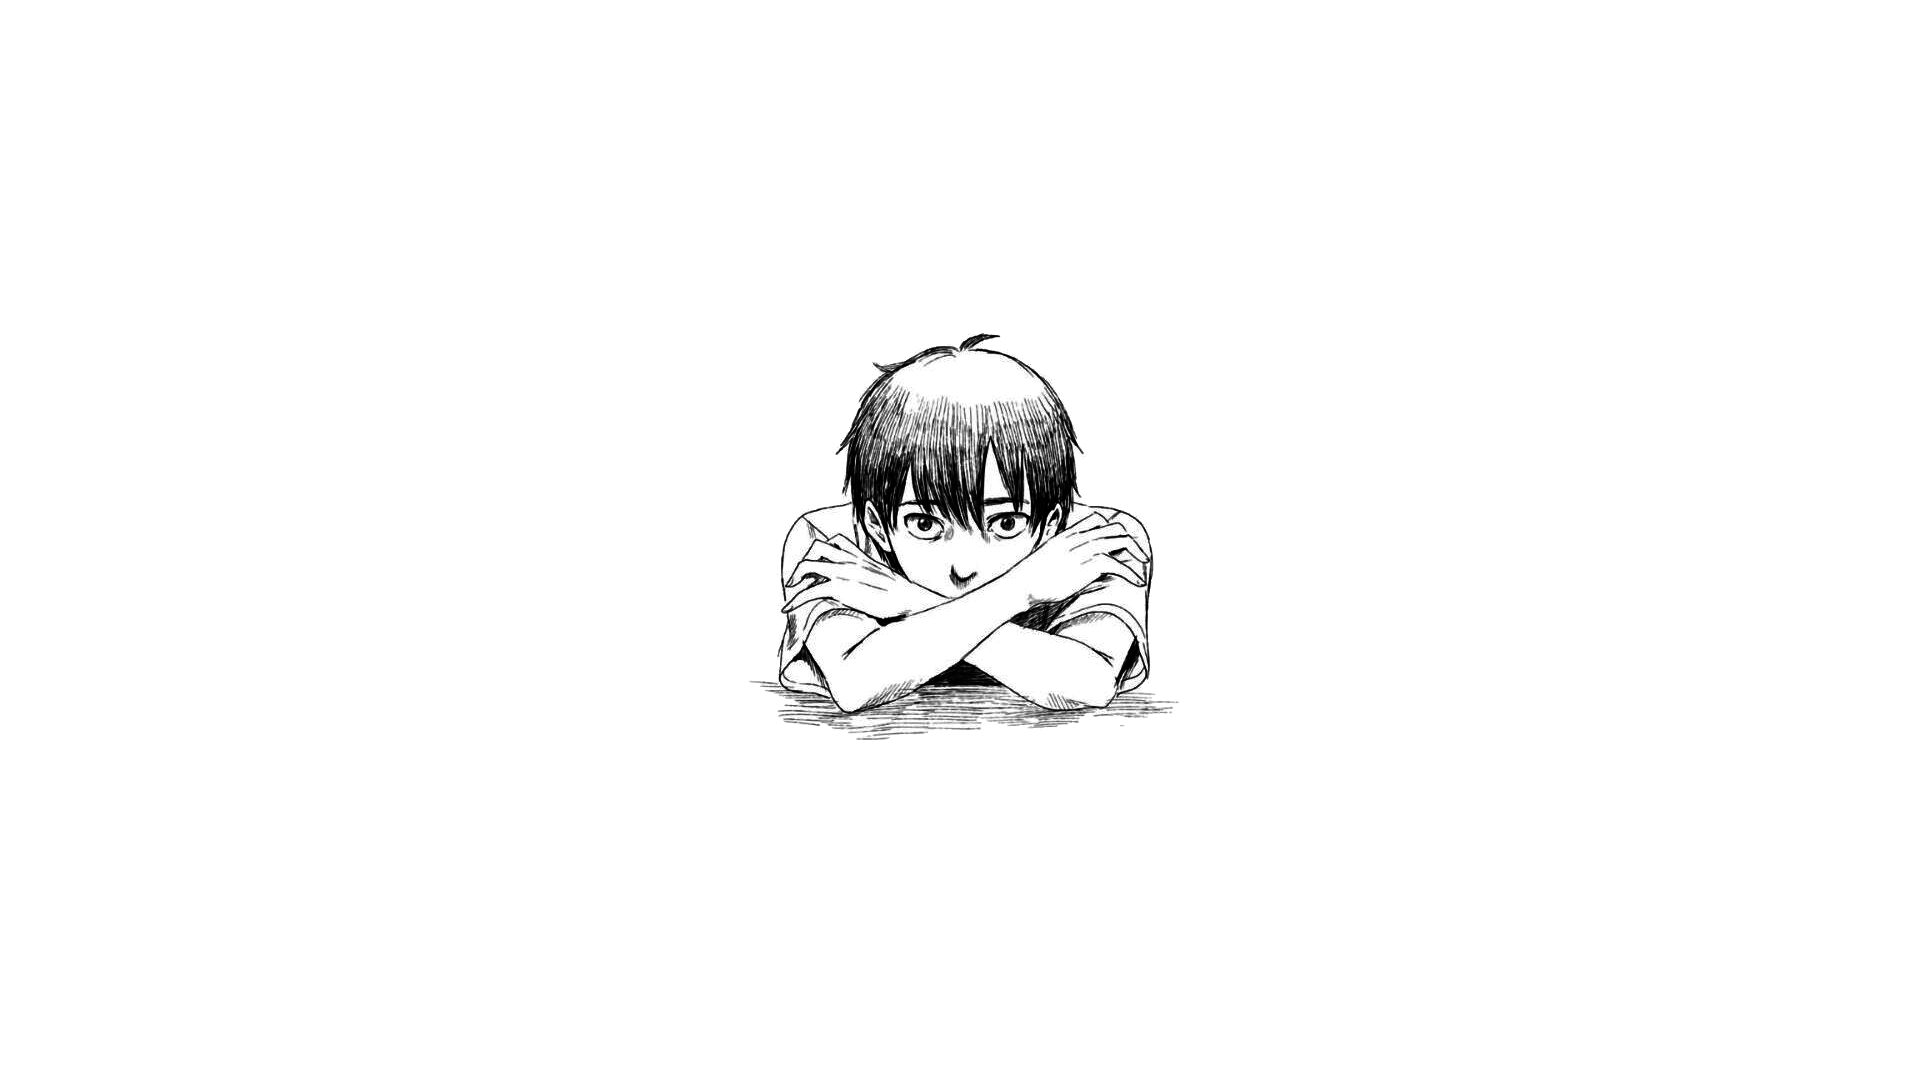 Aku no Hana - Other & Anime Background Wallpapers on Desktop Nexus (Image  1721259)